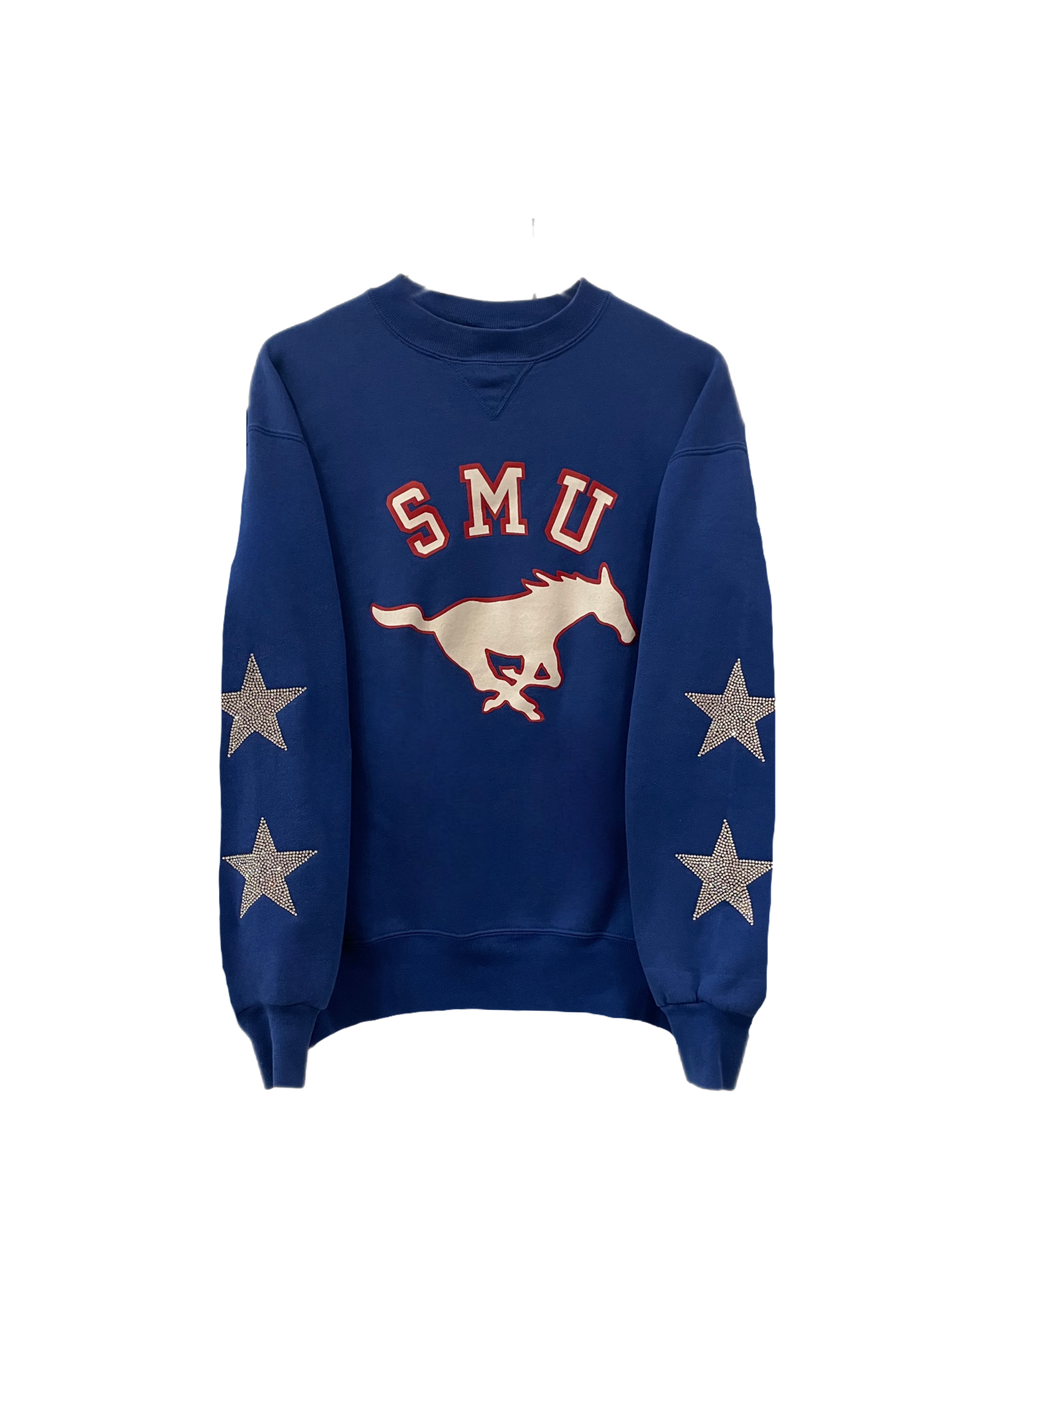 Southern Methodist University, One of a KIND Vintage SMU Sweatshirt with Crystal Star Design